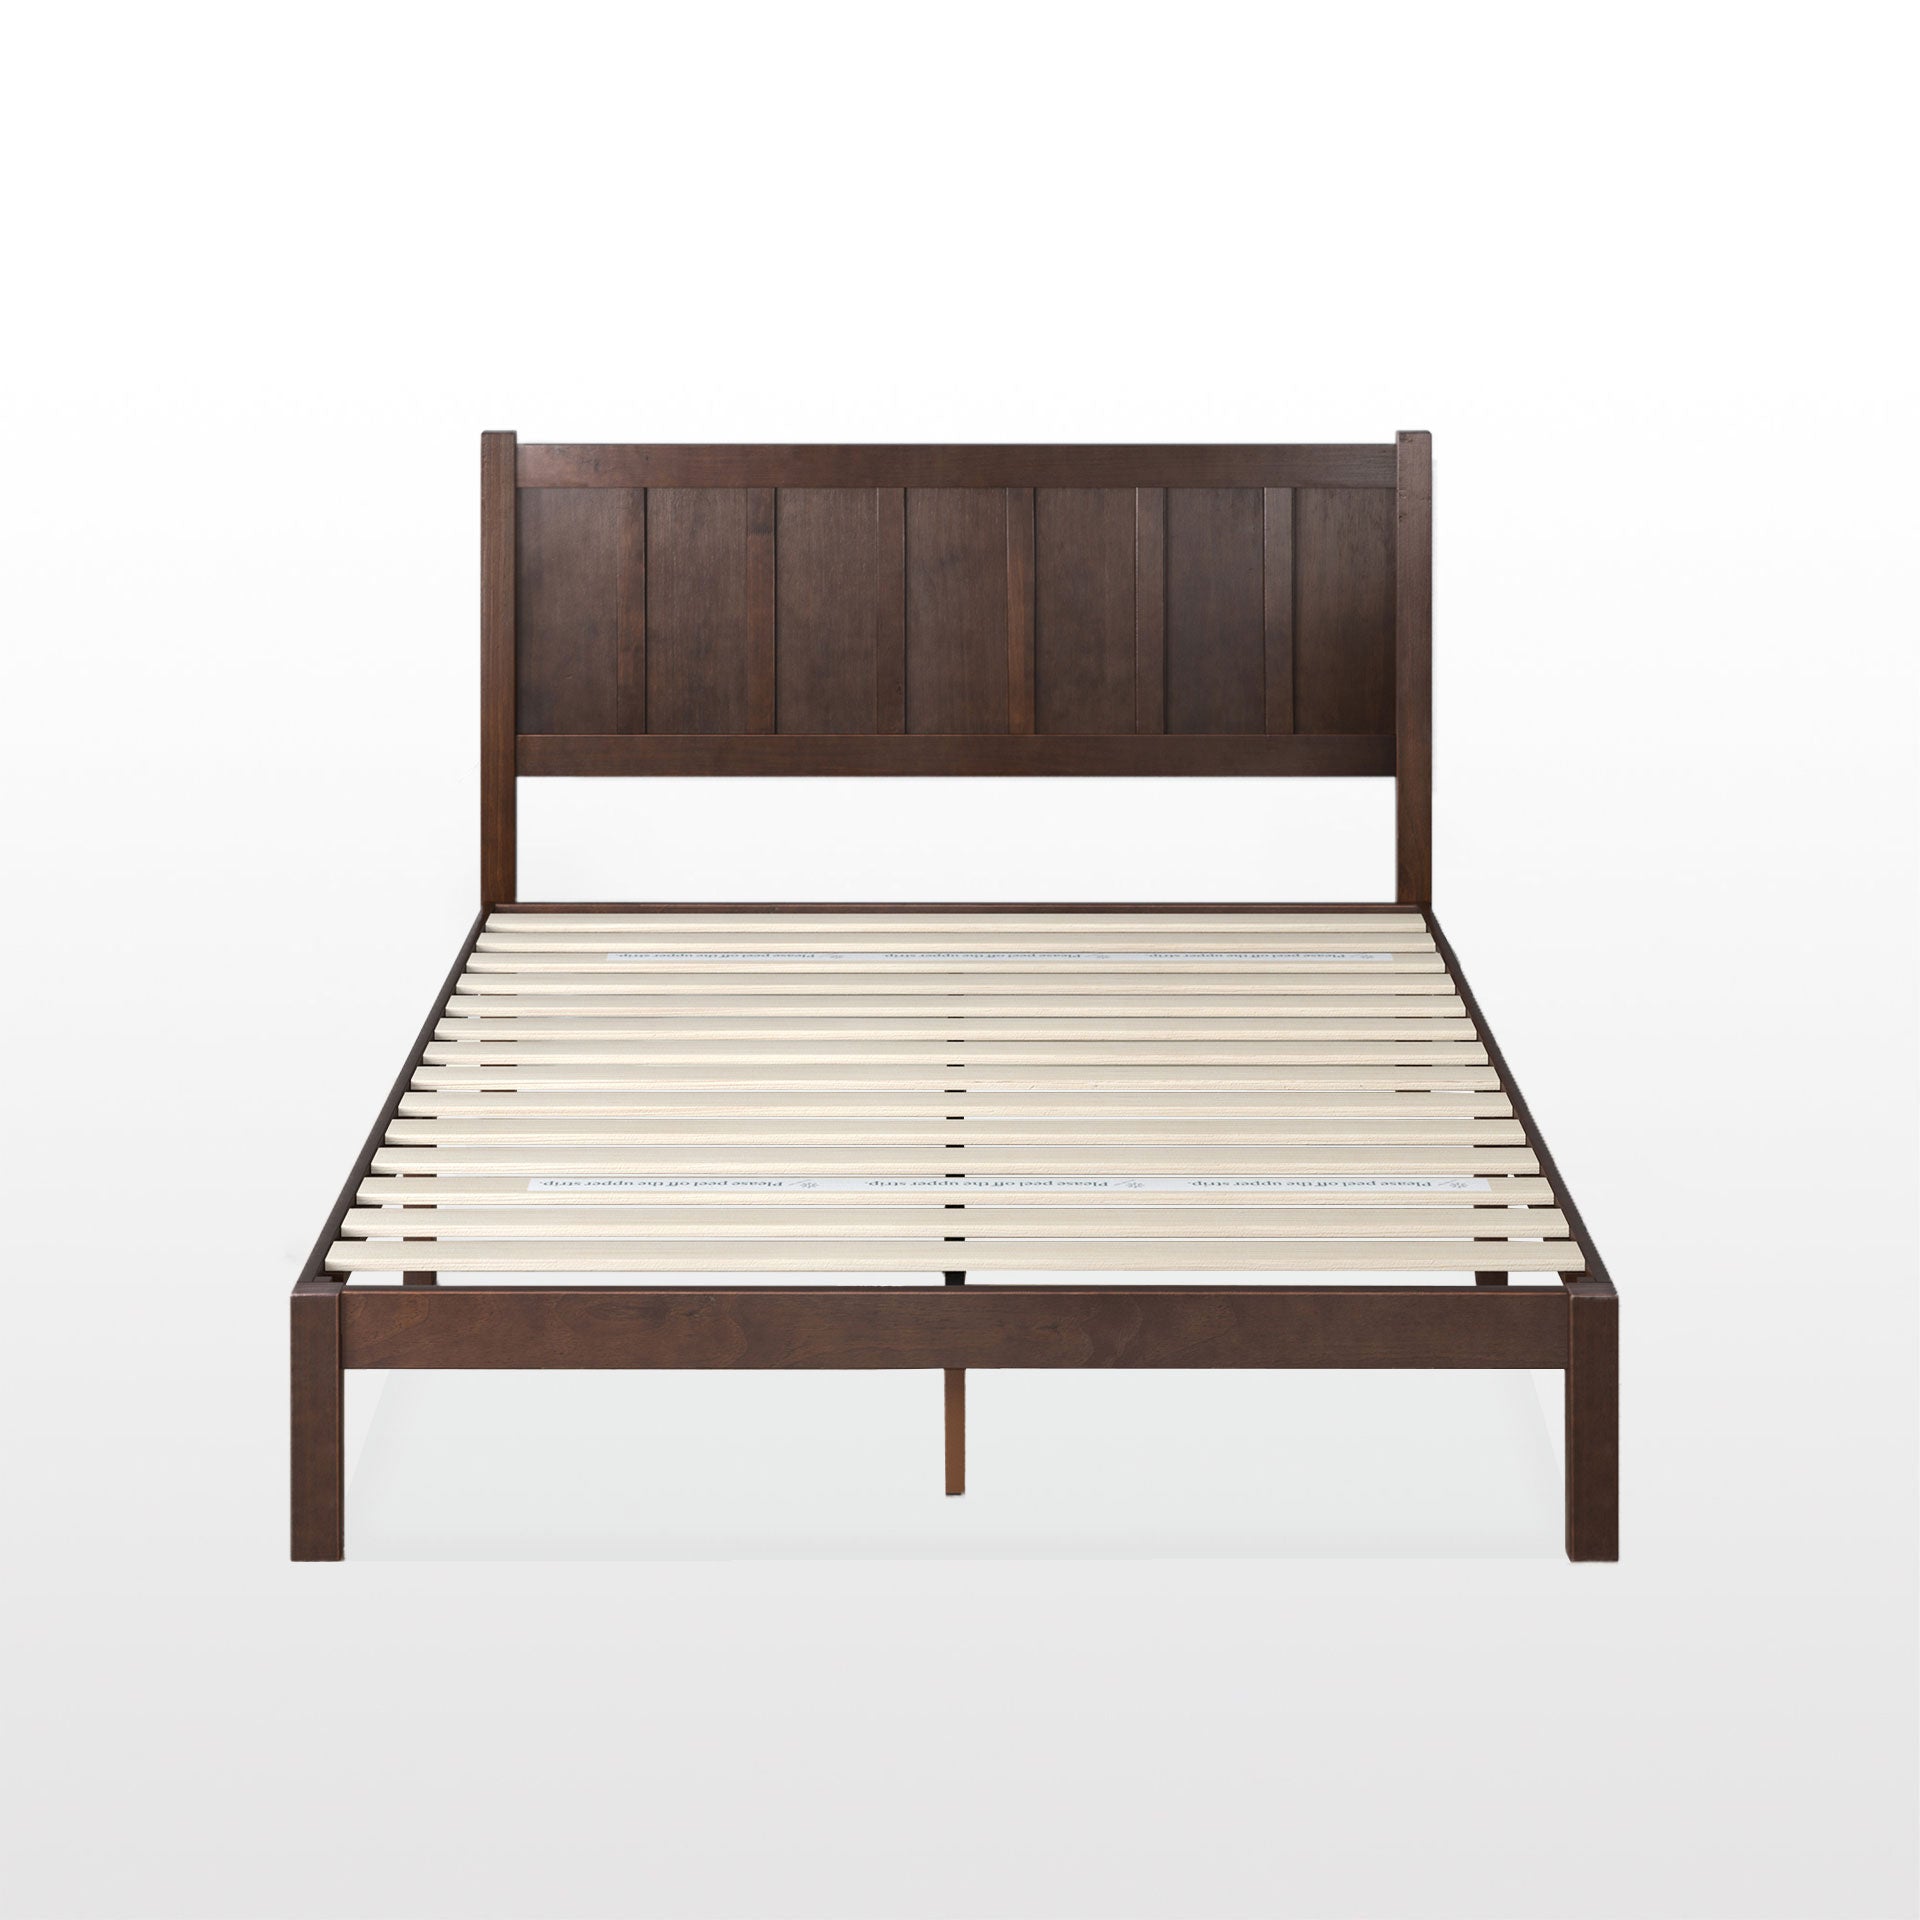 Zinus Adrian Wood Rustic Style Platform Bed Frame 